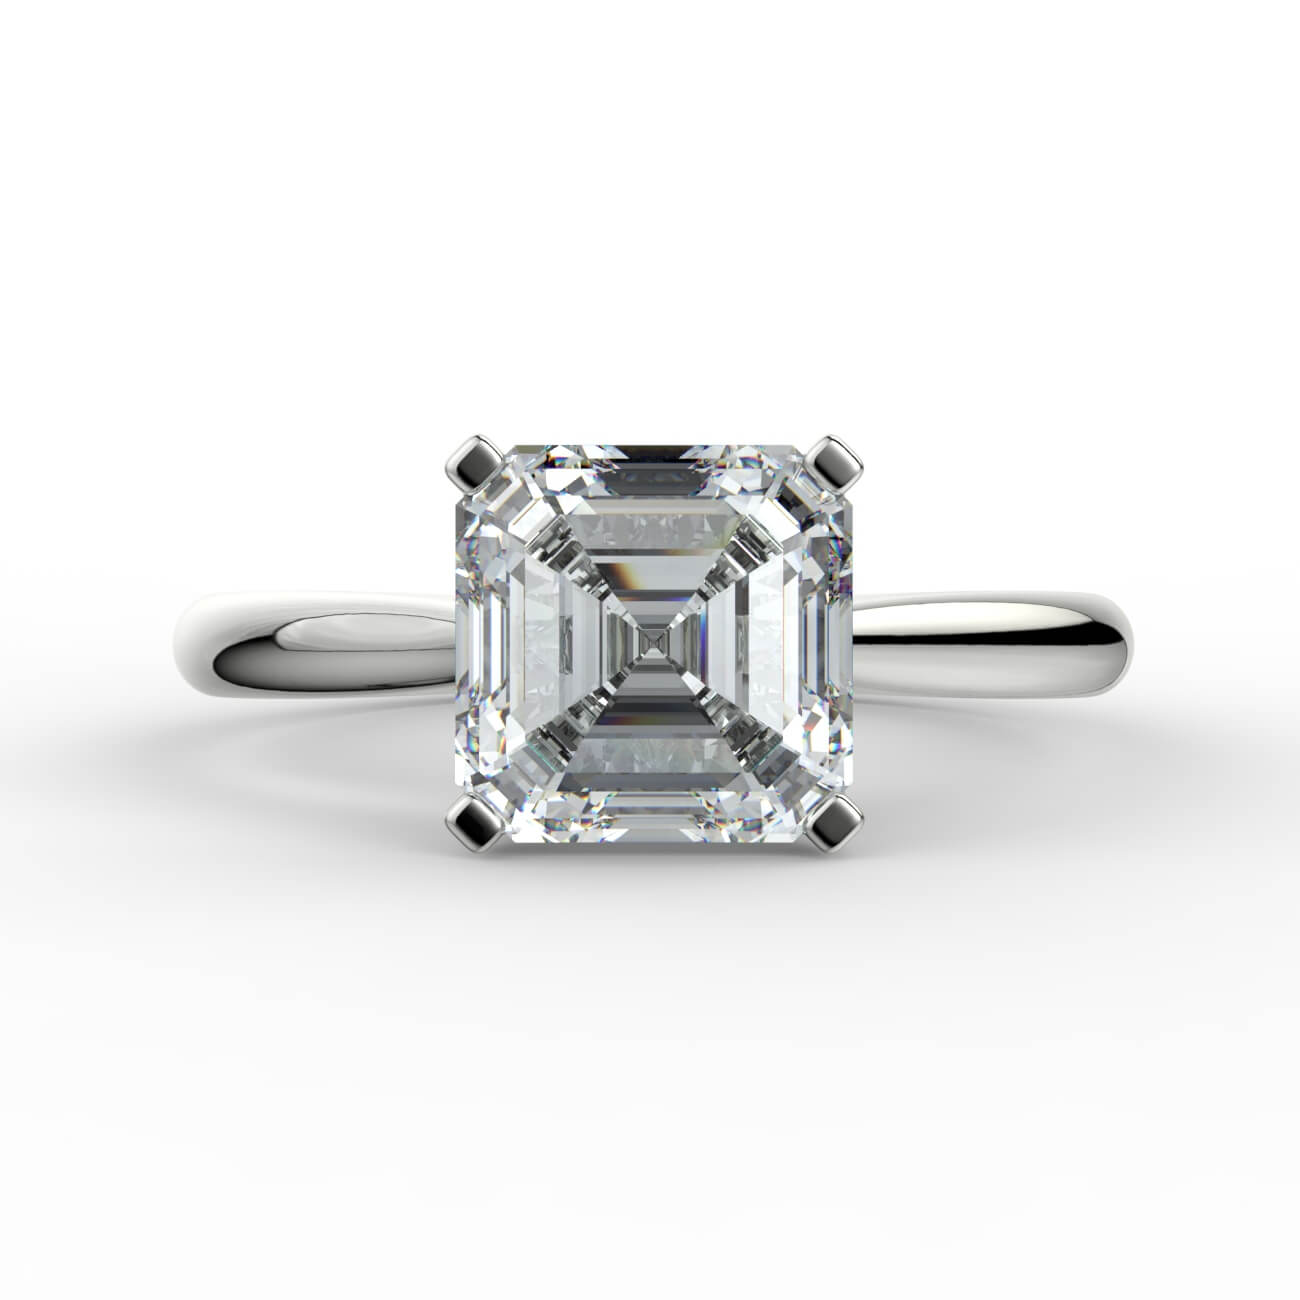 Asscher cut diamond cathedral engagement ring in platinum – Australian Diamond Network